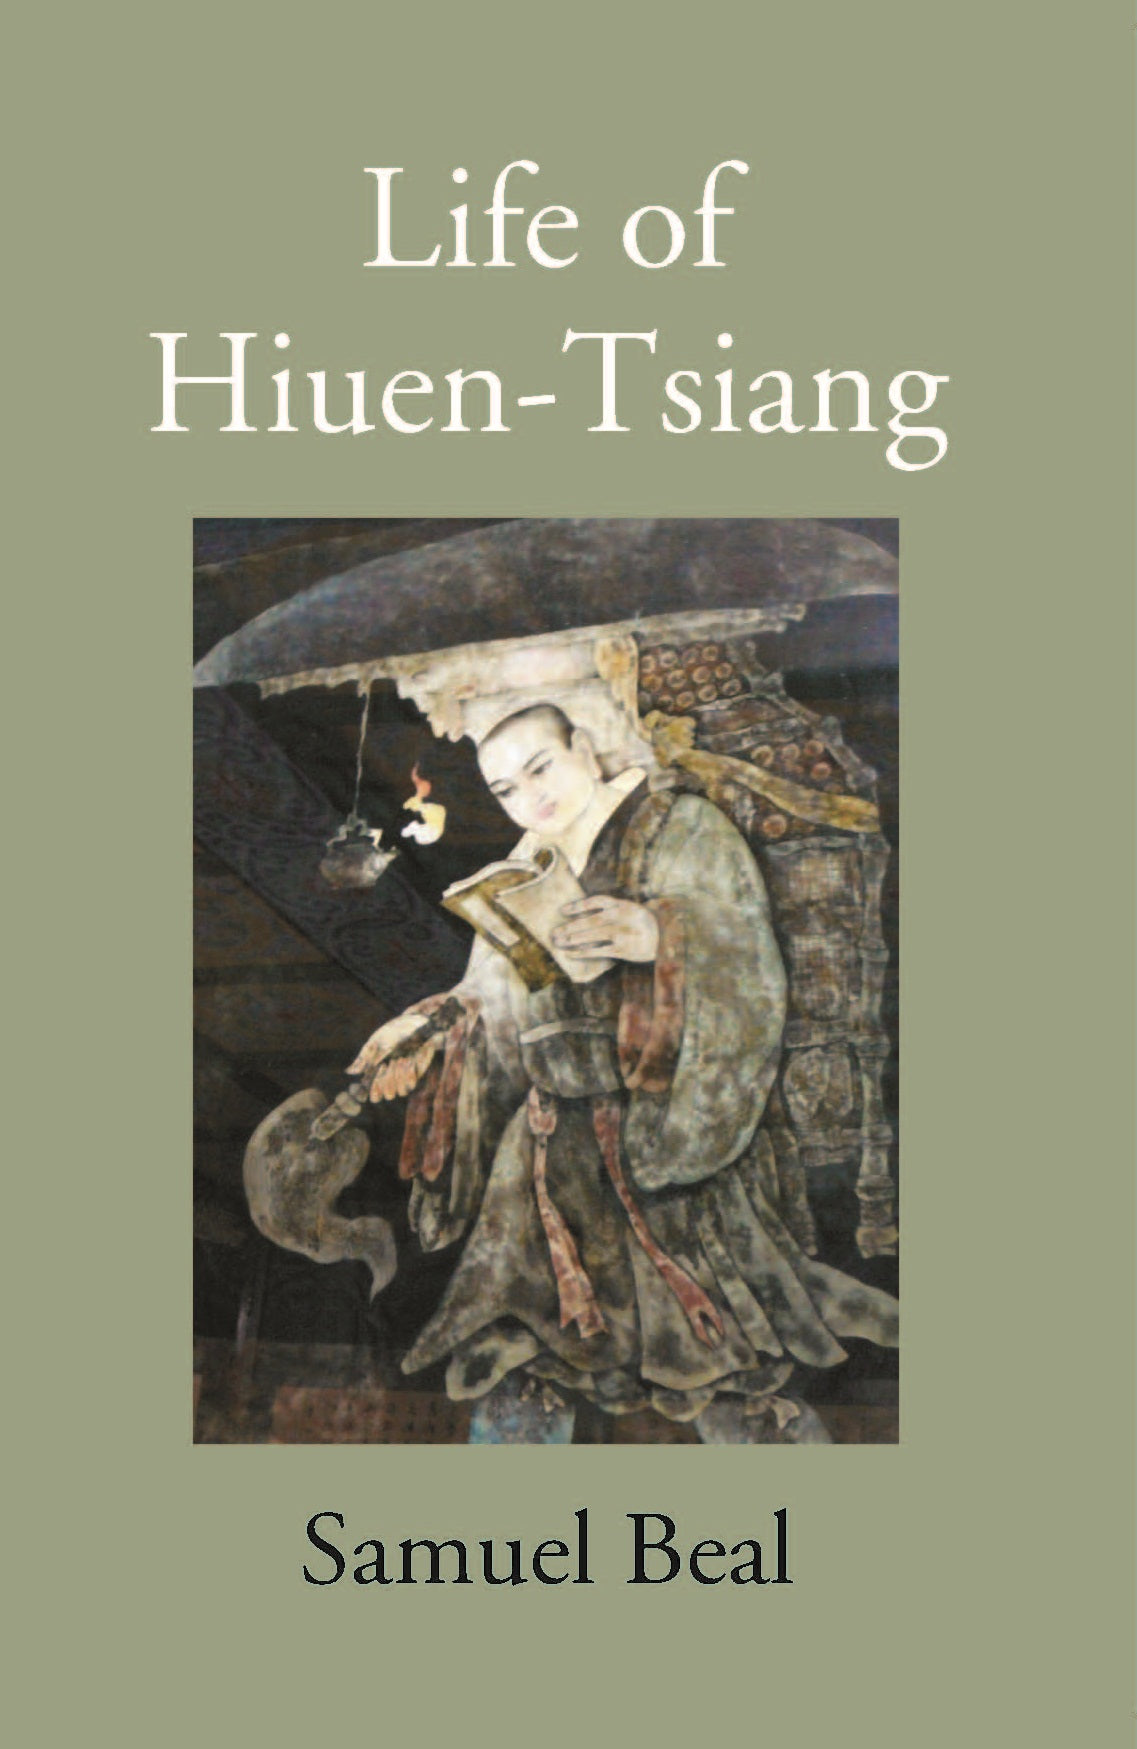 The Life Of Hiuen-Tsiang